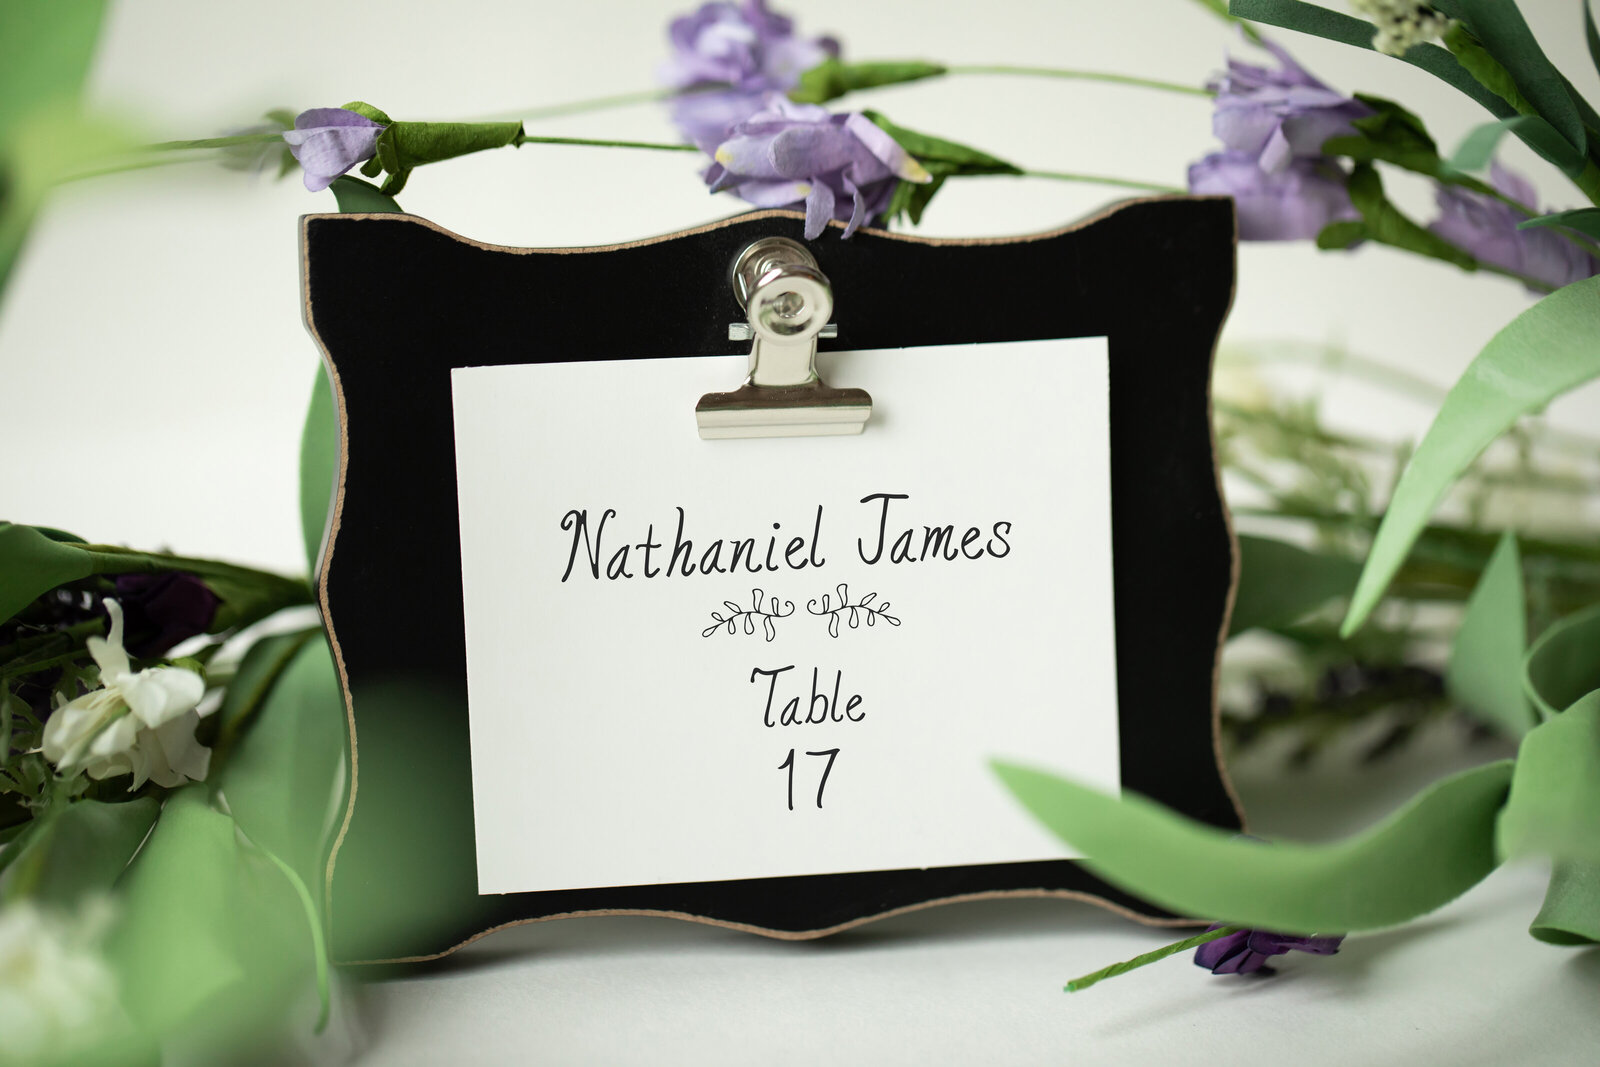 Nathaniel James wedding tag